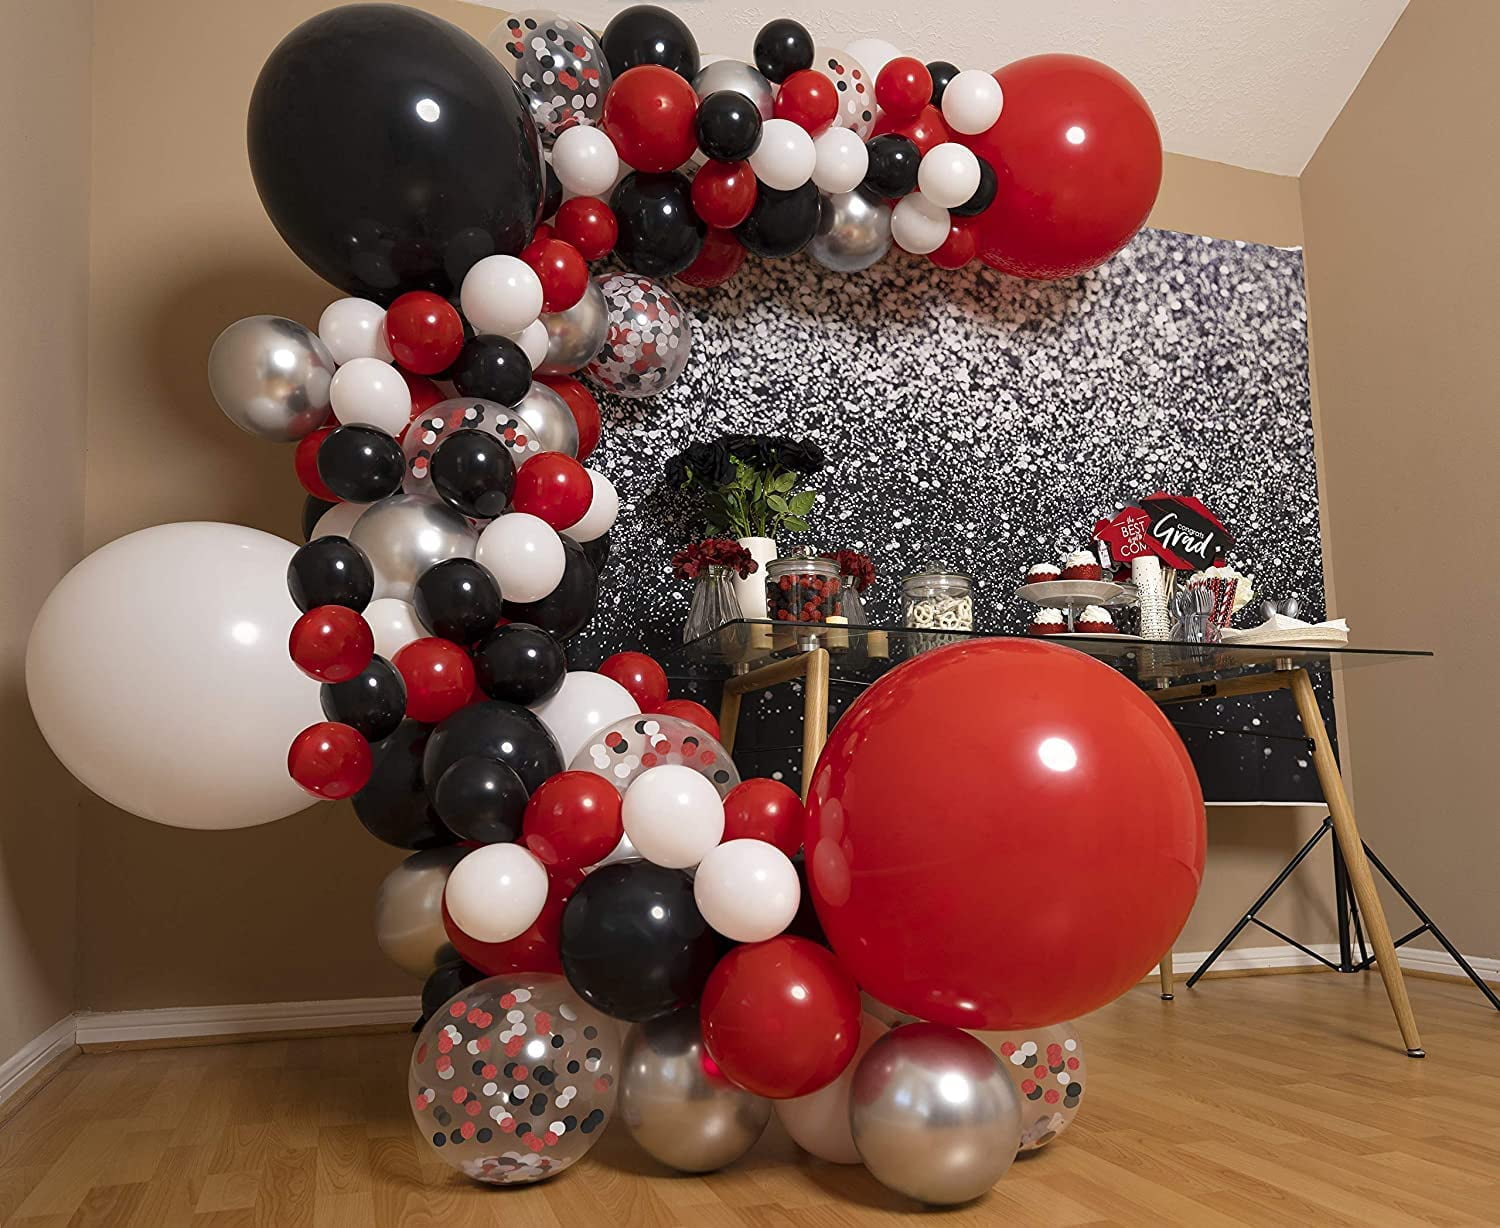 ballooncolumns #DD4L #red #black #silver  Silver party decorations, Red  party decorations, Party decorations